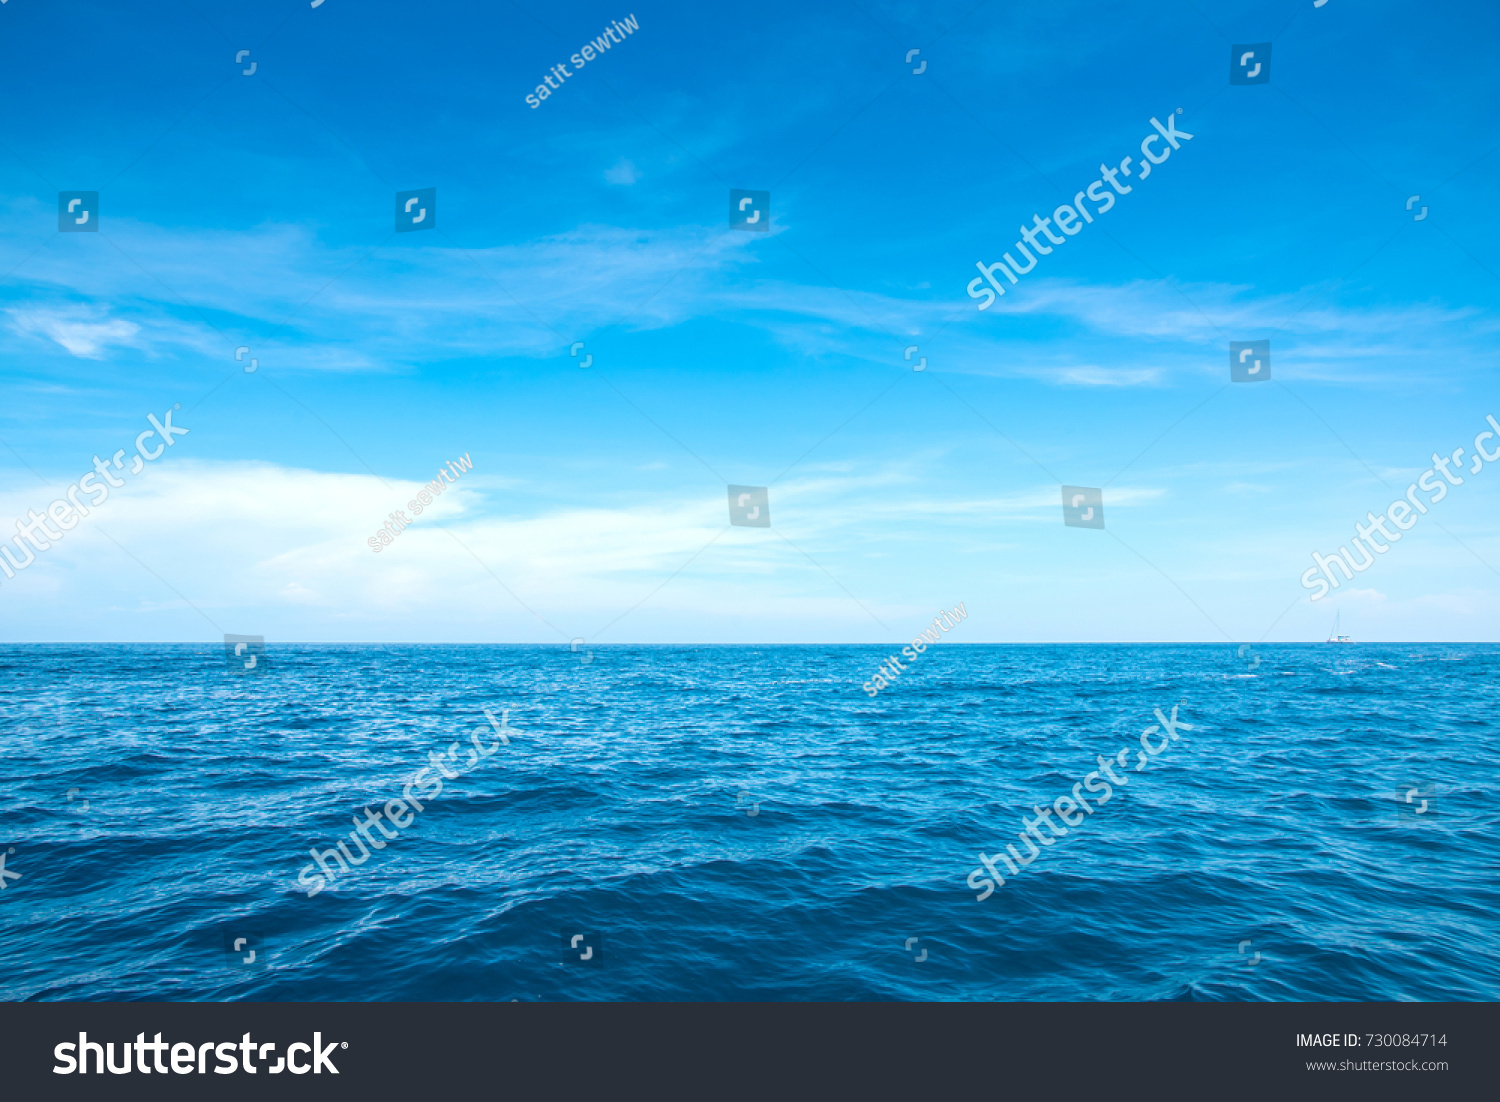 Calm Sea and Blue Sky Background. #730084714